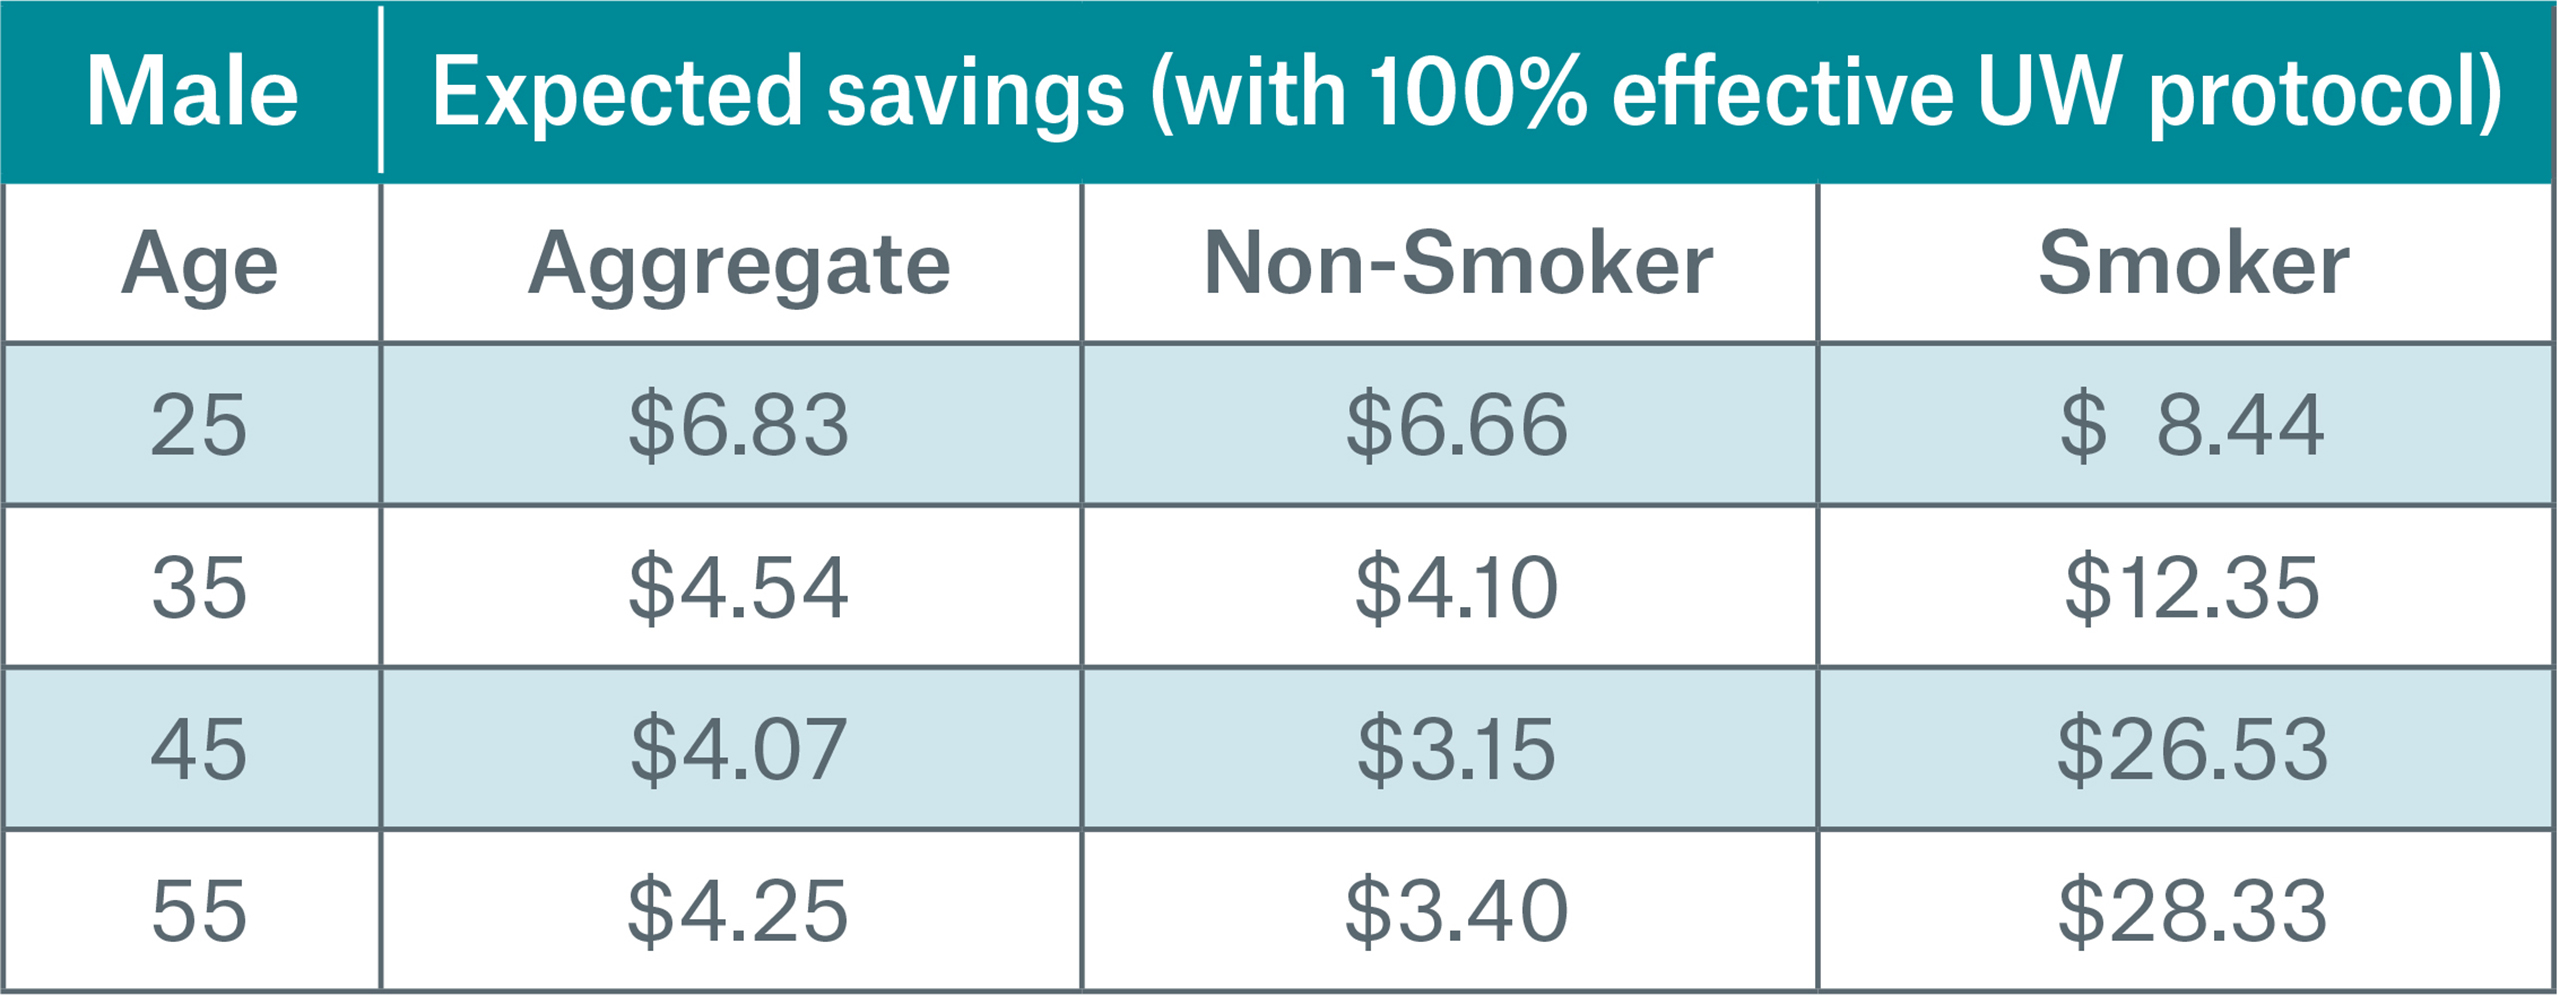 Table-3_male expected savings, aggregate,non-smoker,smoker.jpg